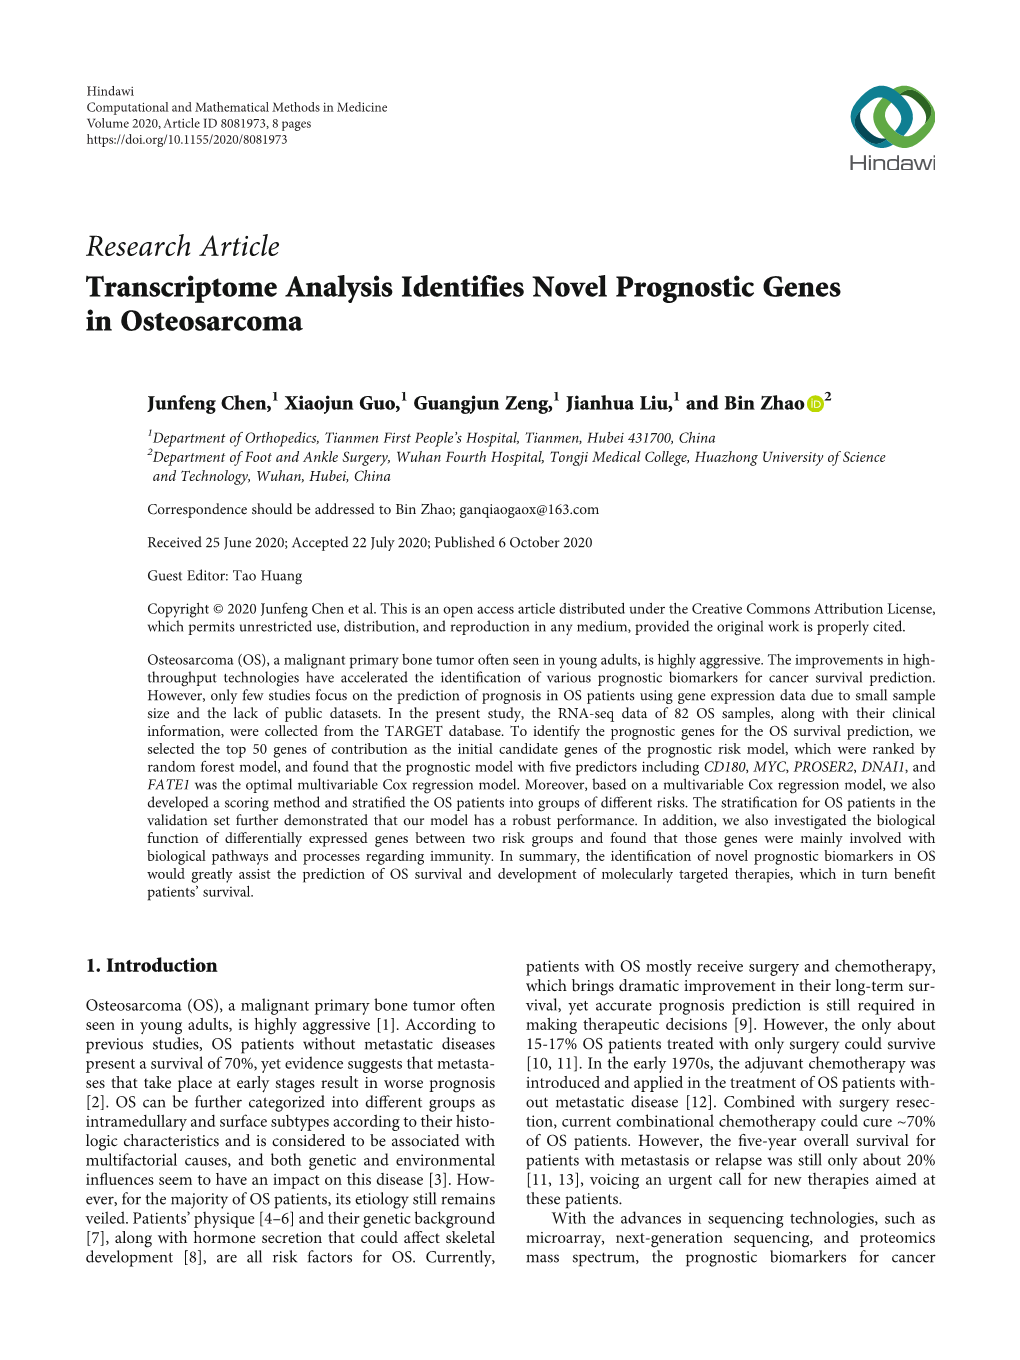 Transcriptome Analysis Identifies Novel Prognostic Genes in Osteosarcoma